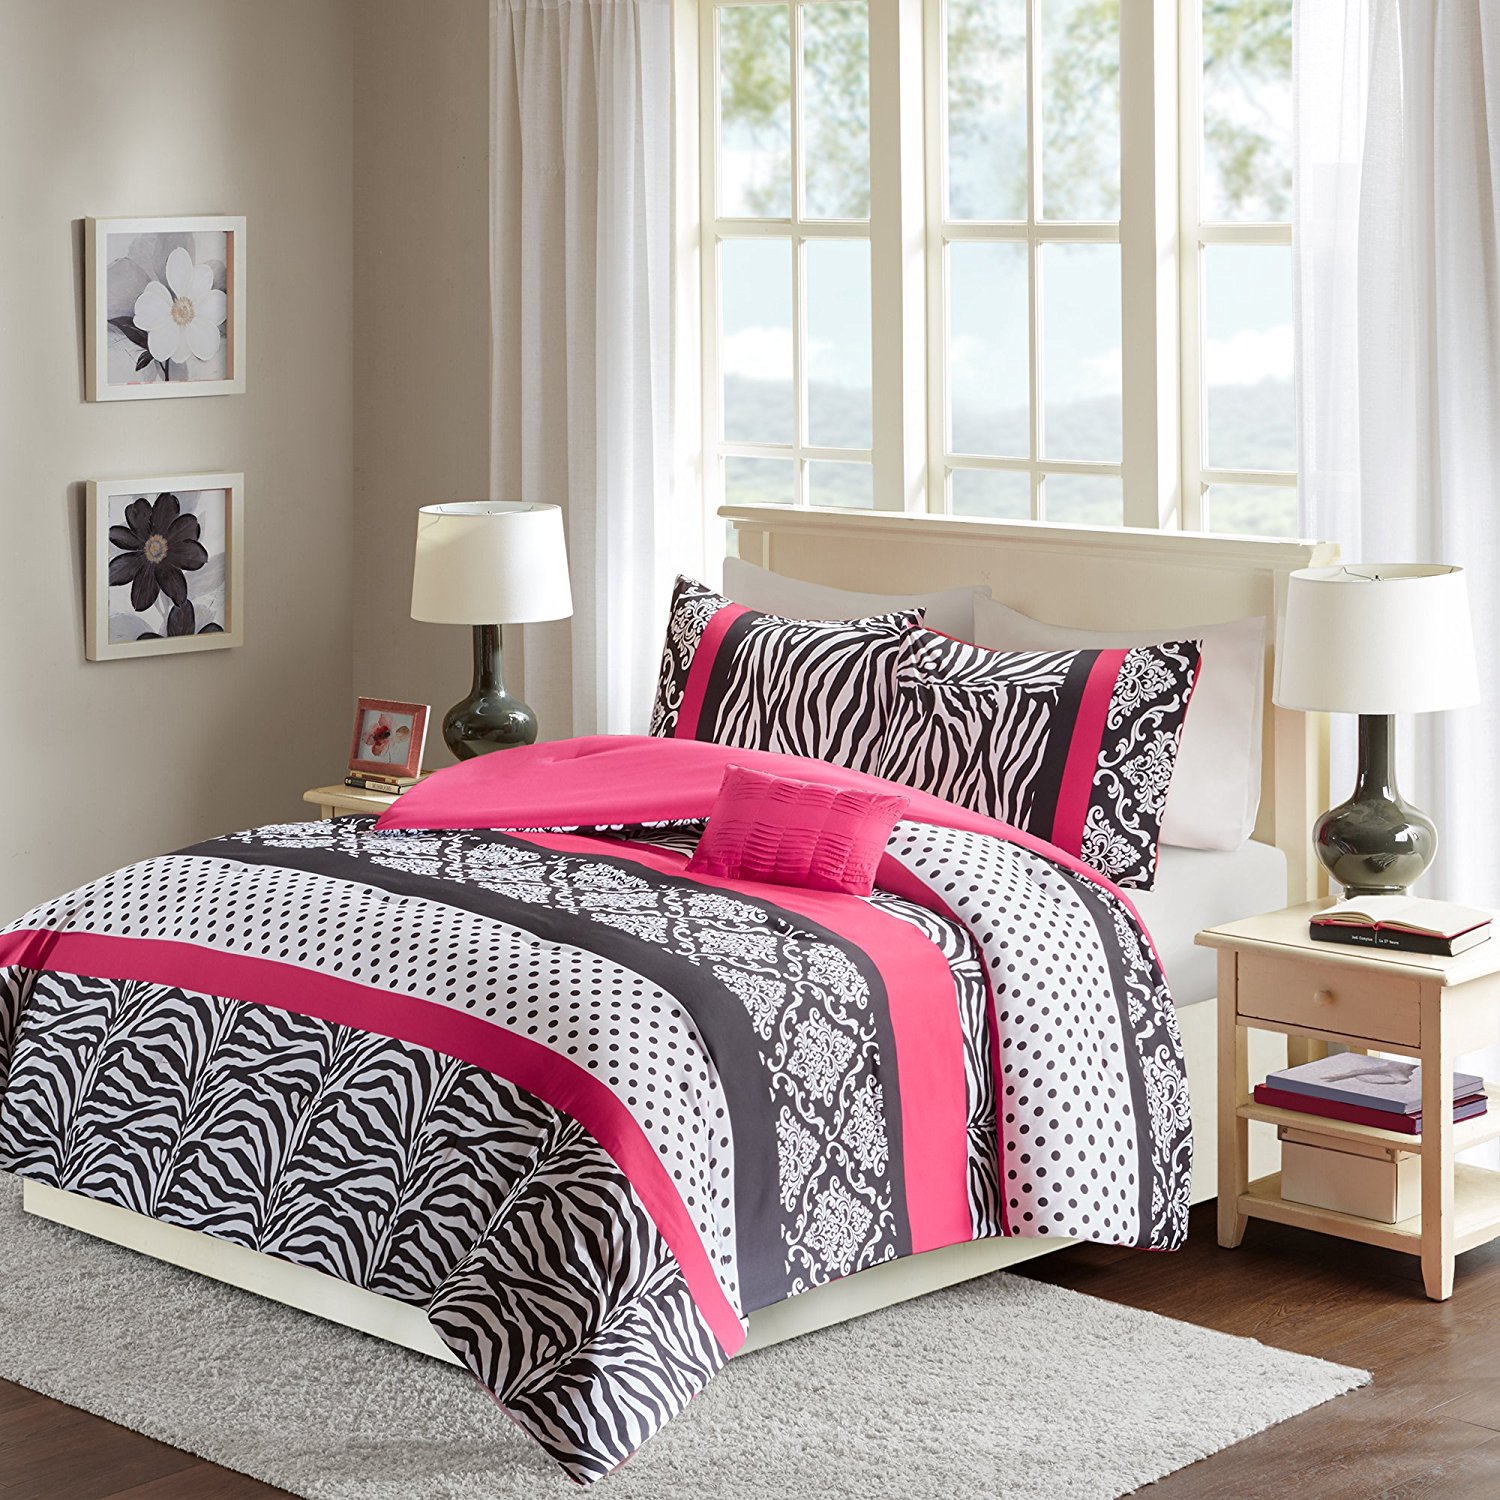 Comfort Spaces - Sally Comforter Set - 3 Piece - Hot Pink & Black - Zebra, Damask, Polka dot print - Twin/Twin XL Size, includes 1 Comforter, 1 Sham, 1 Decorative Pillow